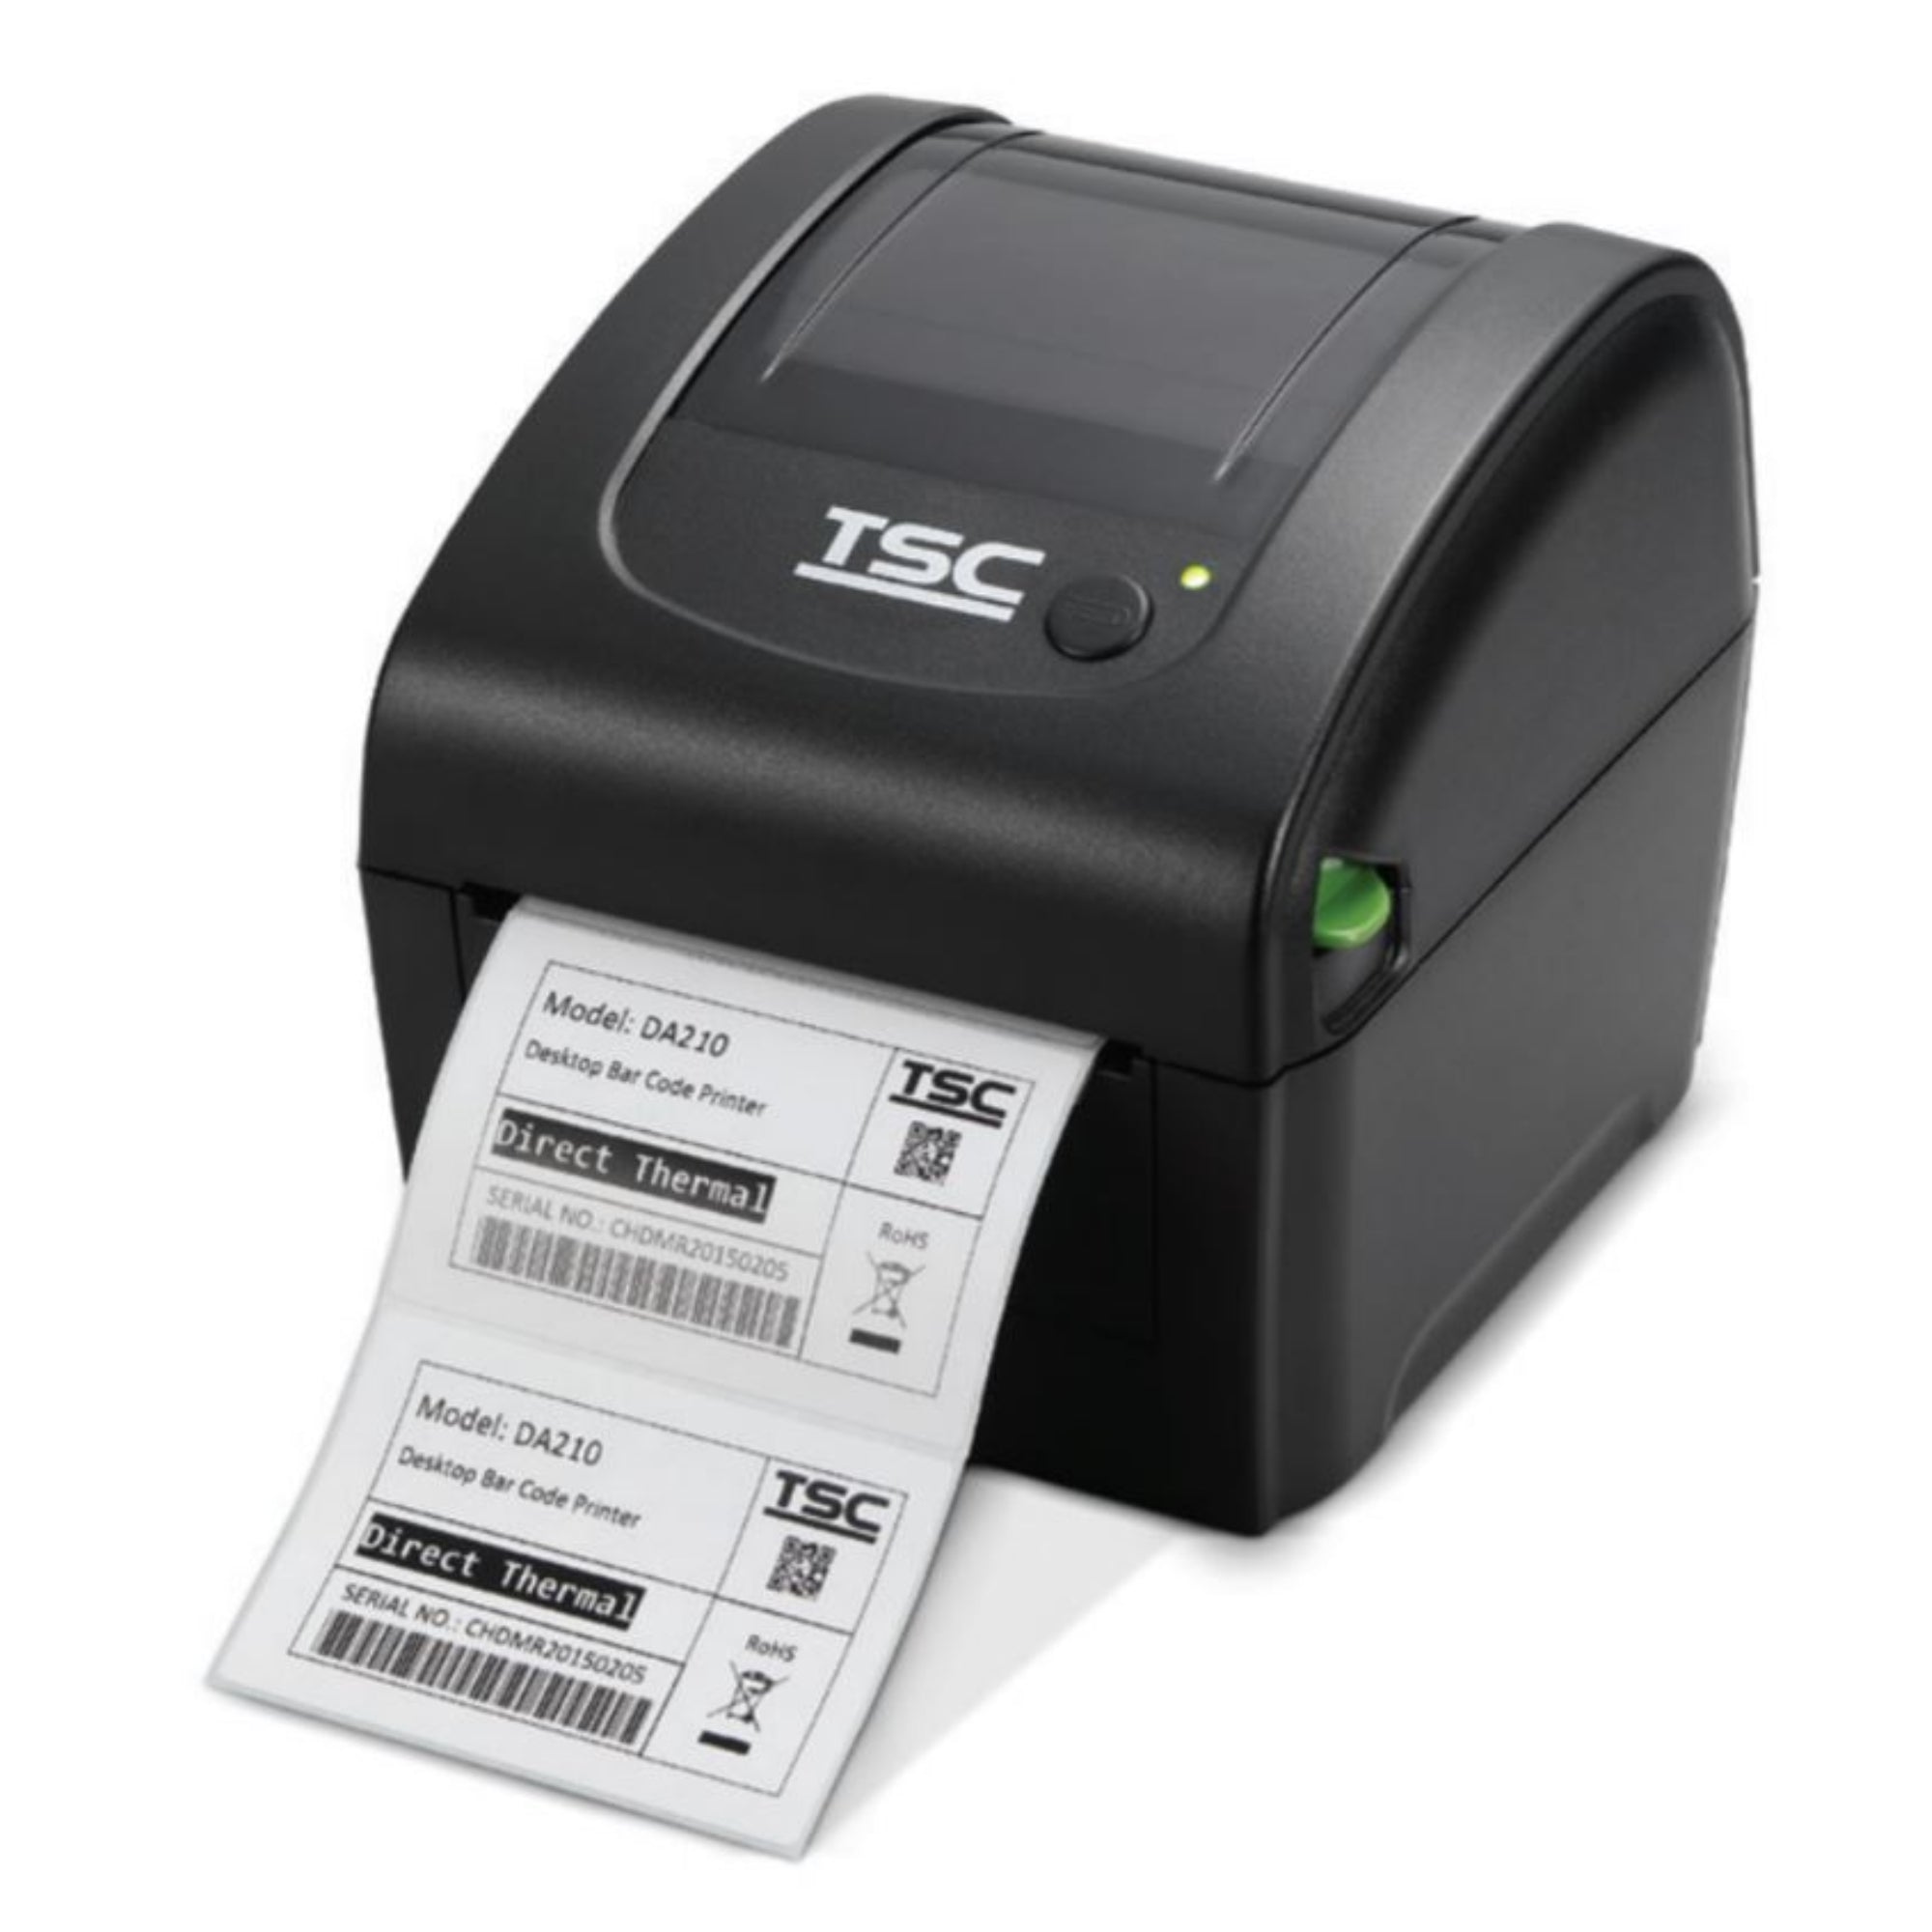 TSC DA210 Direct Thermal Printer Review